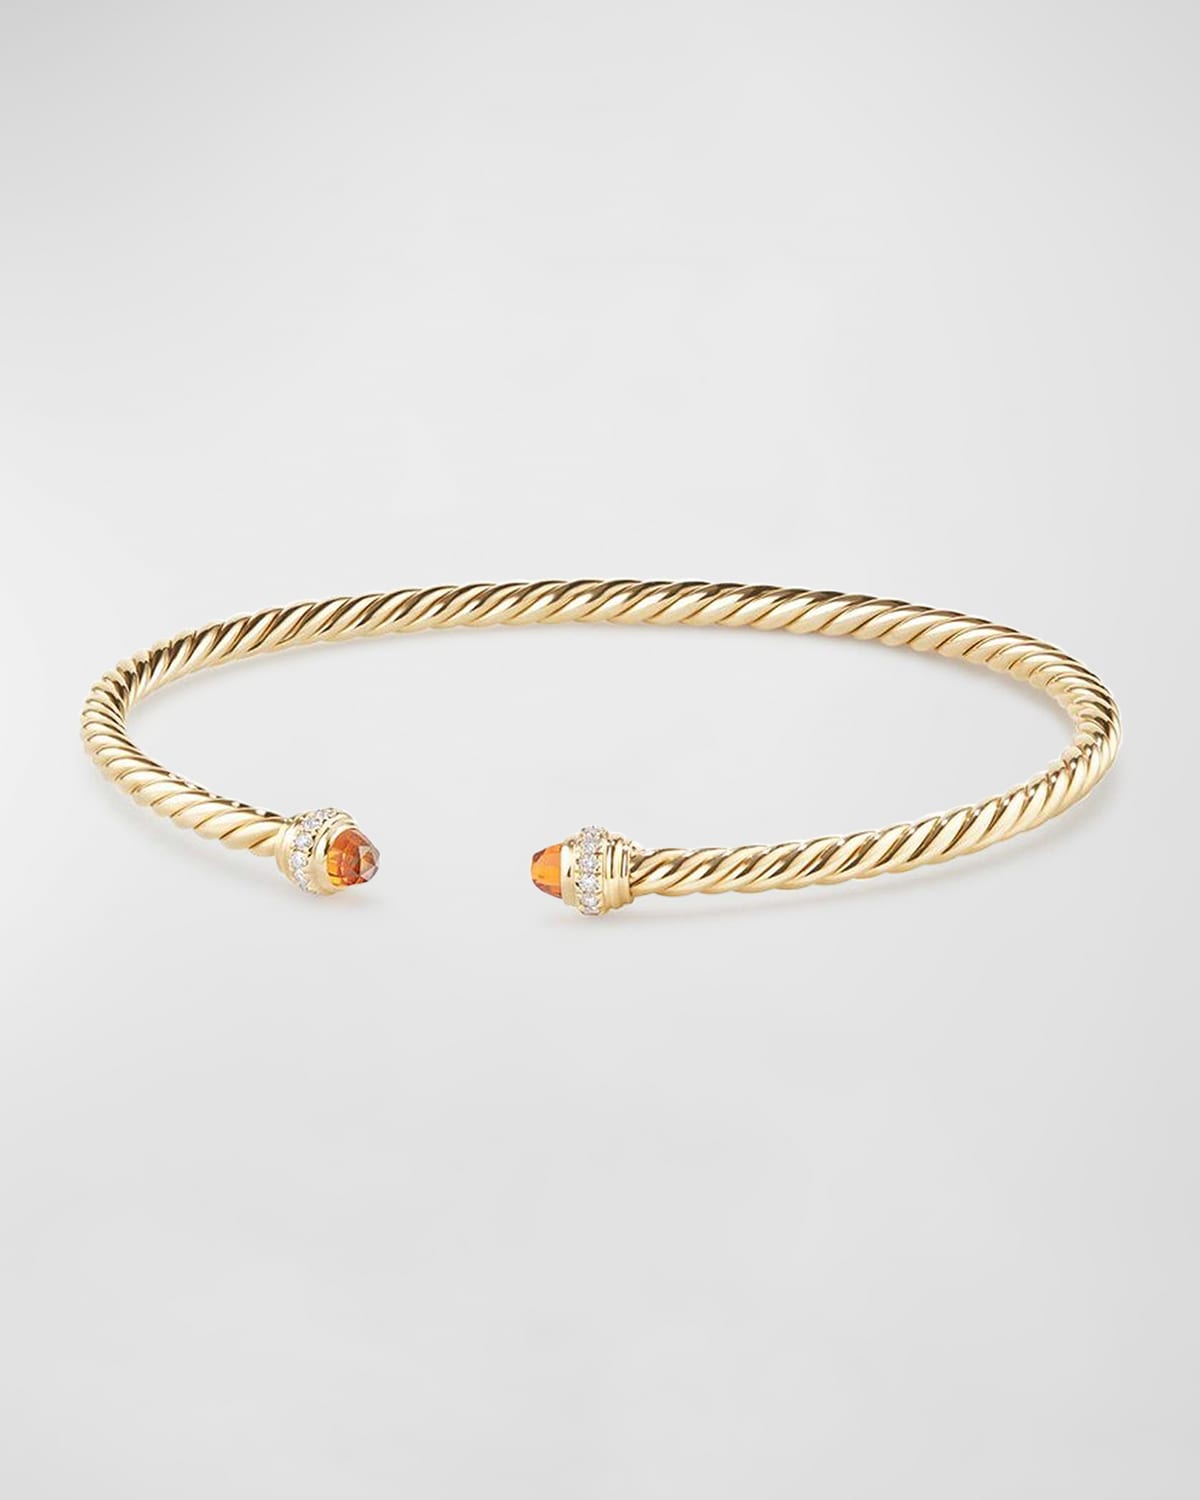 18k Gold CableSpira Bracelet w/ Peridot, Size M